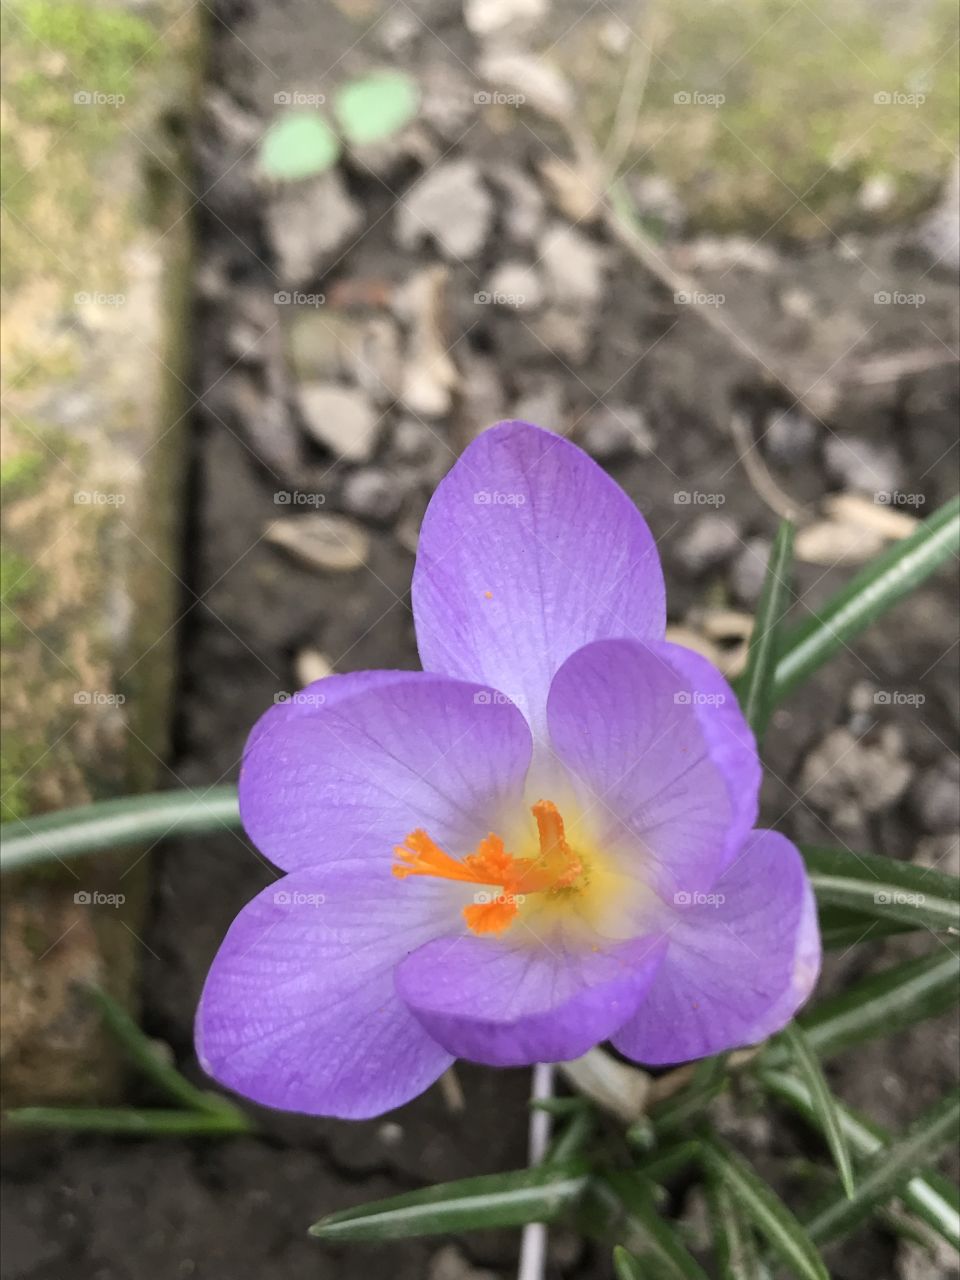 Little purple crocus flower